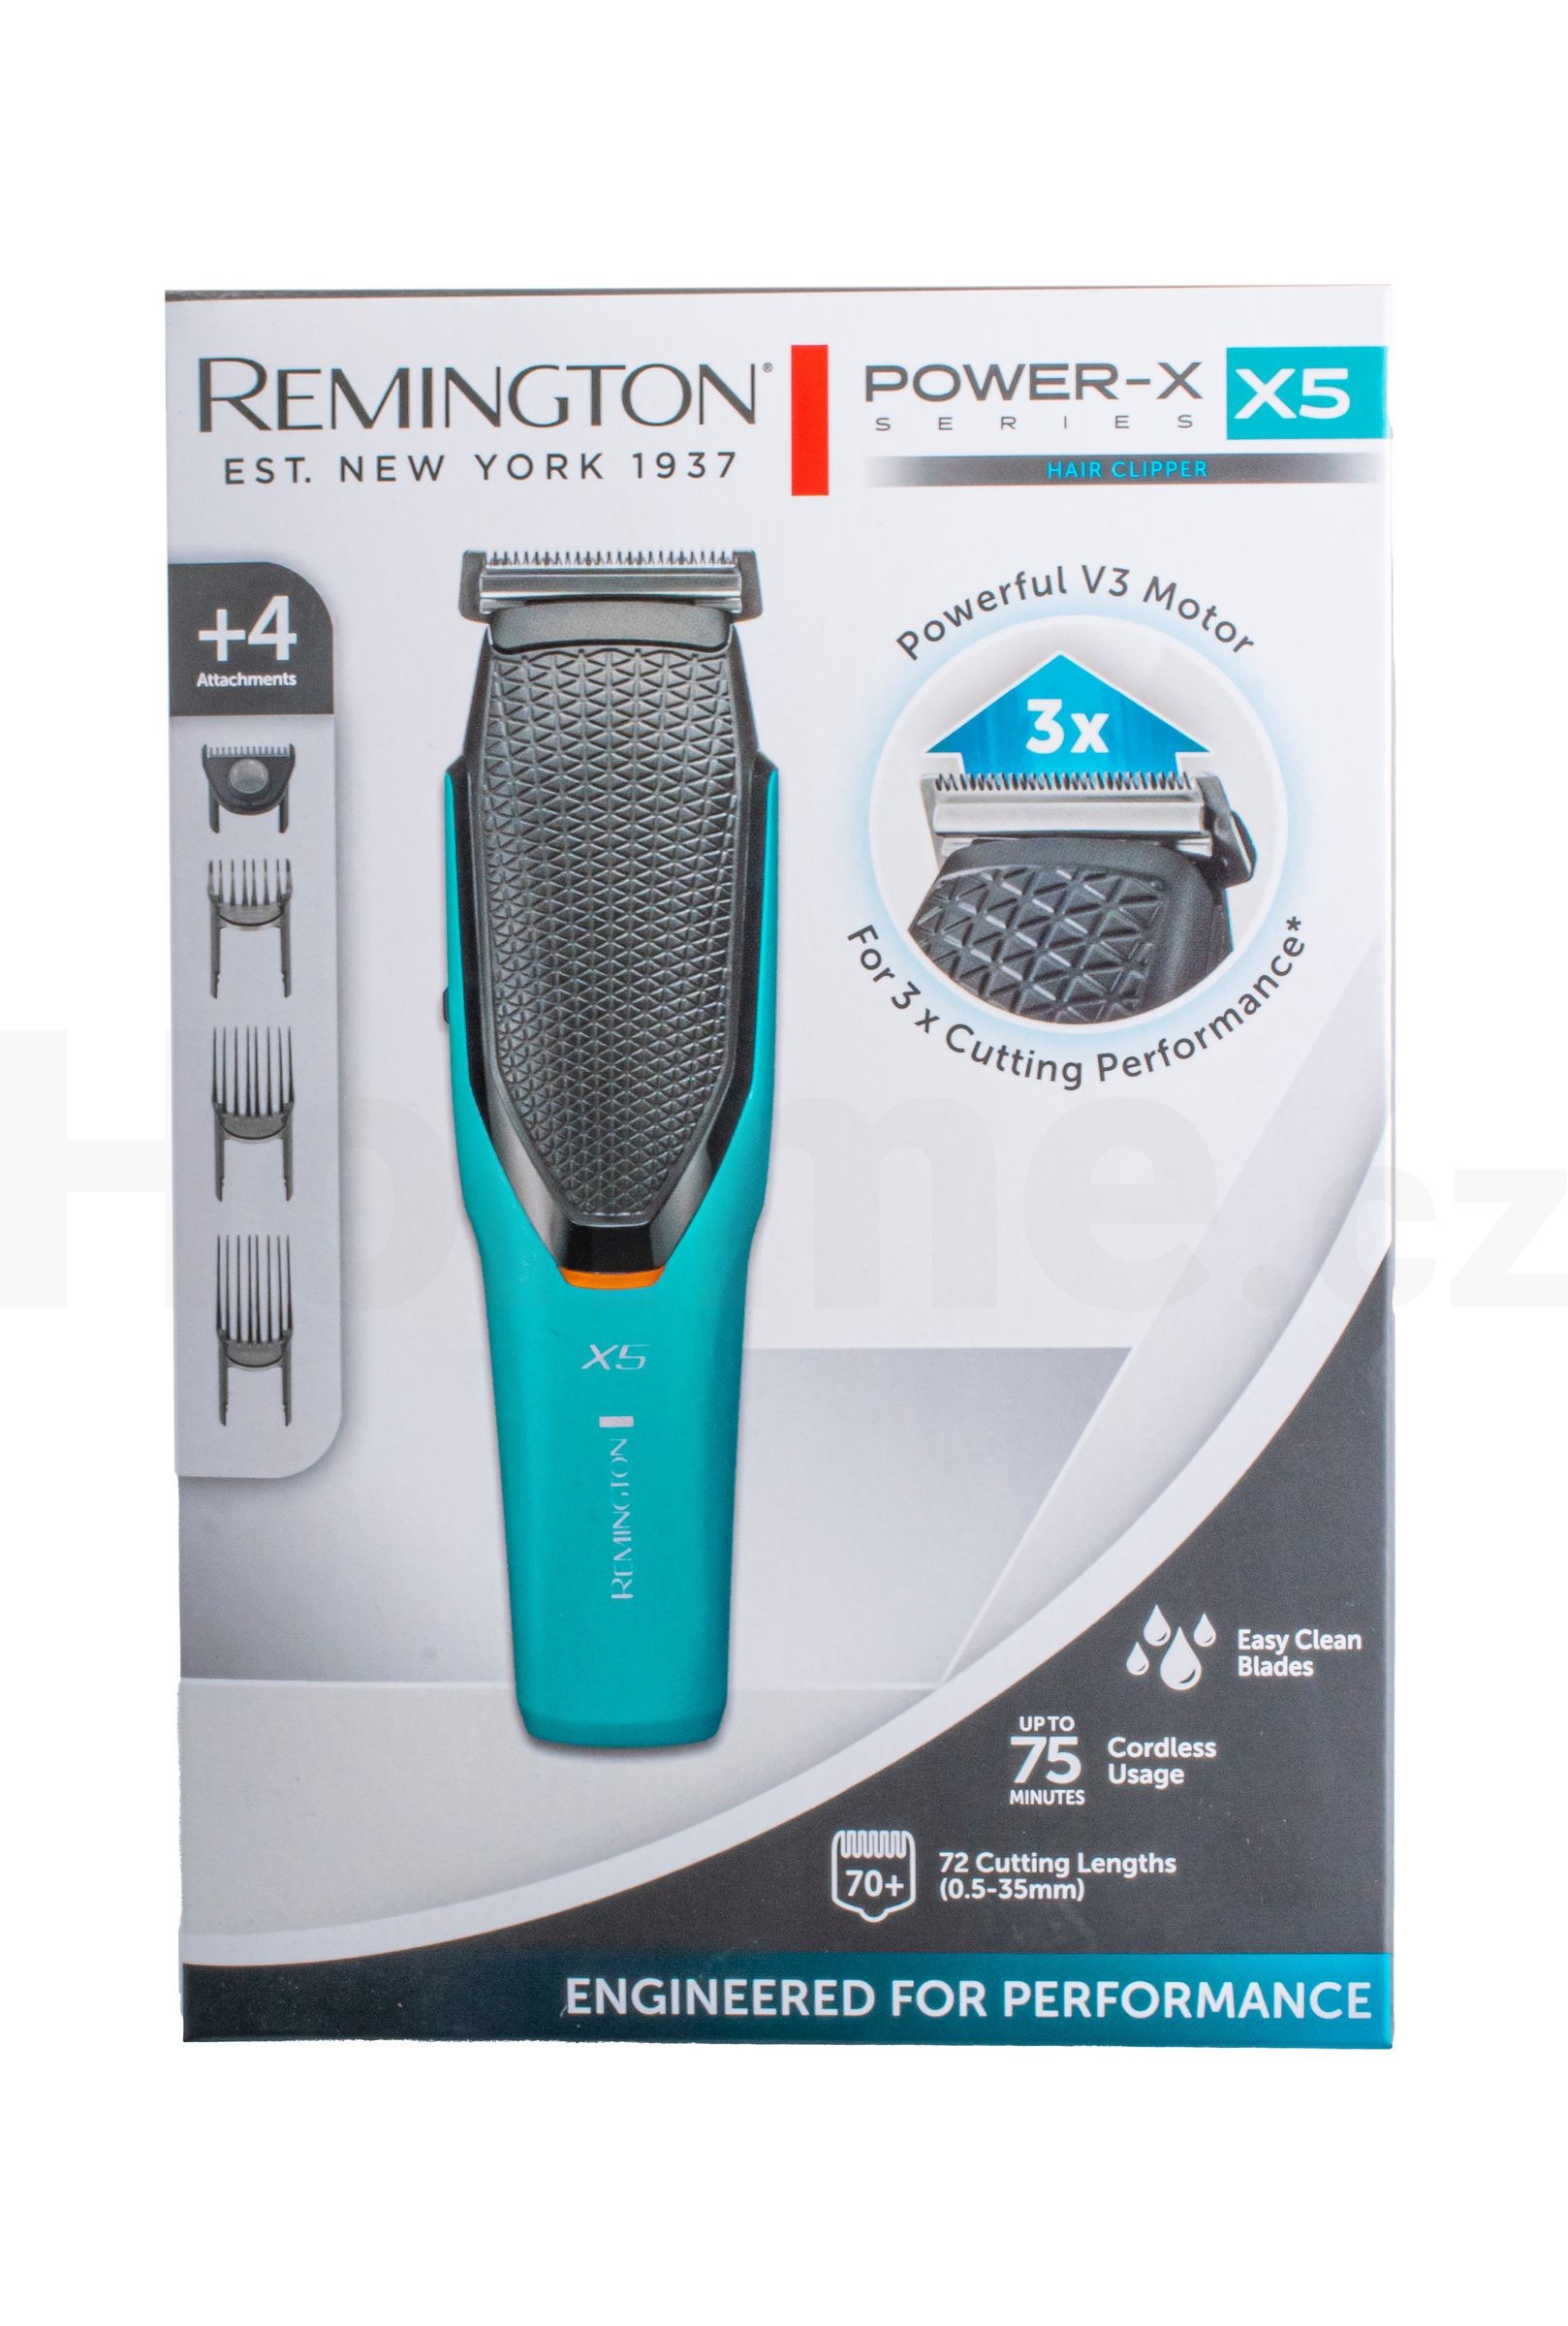 Remington X5 Power-X Series HC5000 zastřihovač vlasů